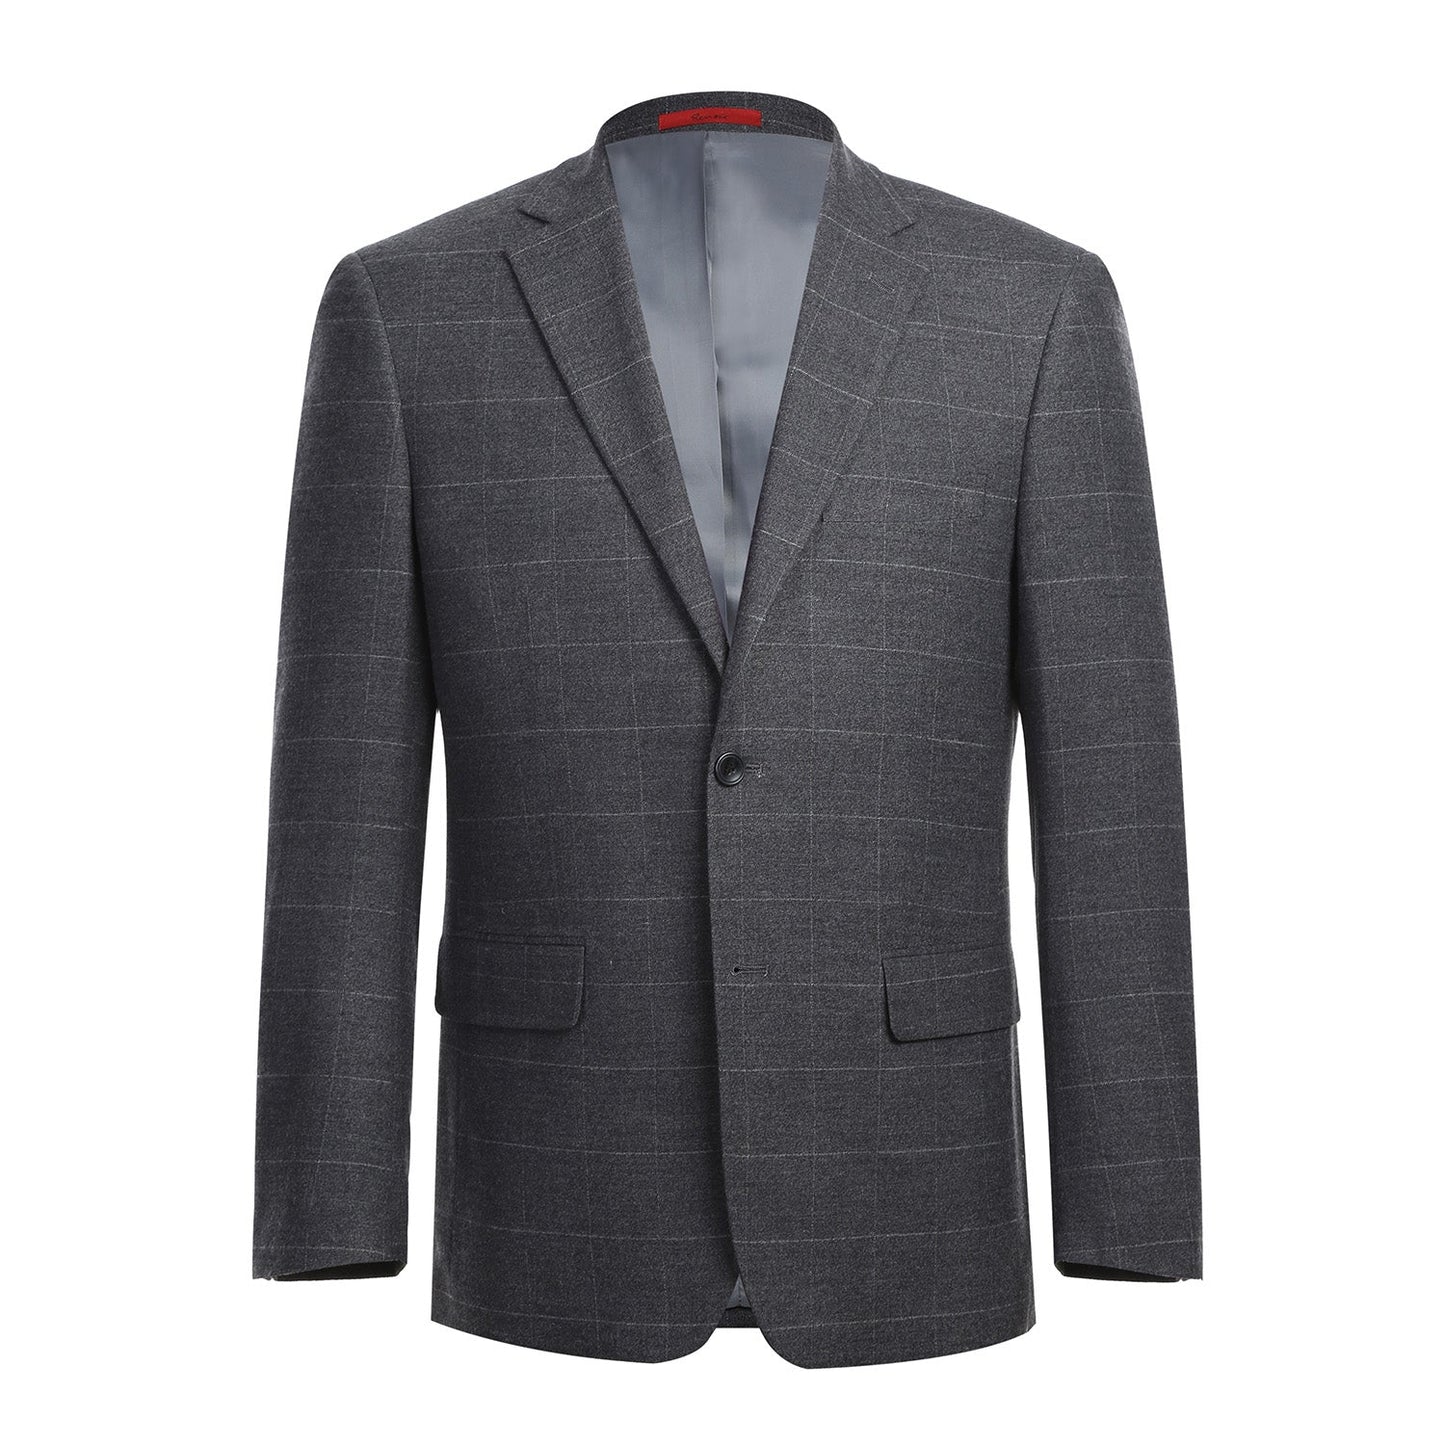 293-31 Men's Slim Fit Grey Windowpane Suit